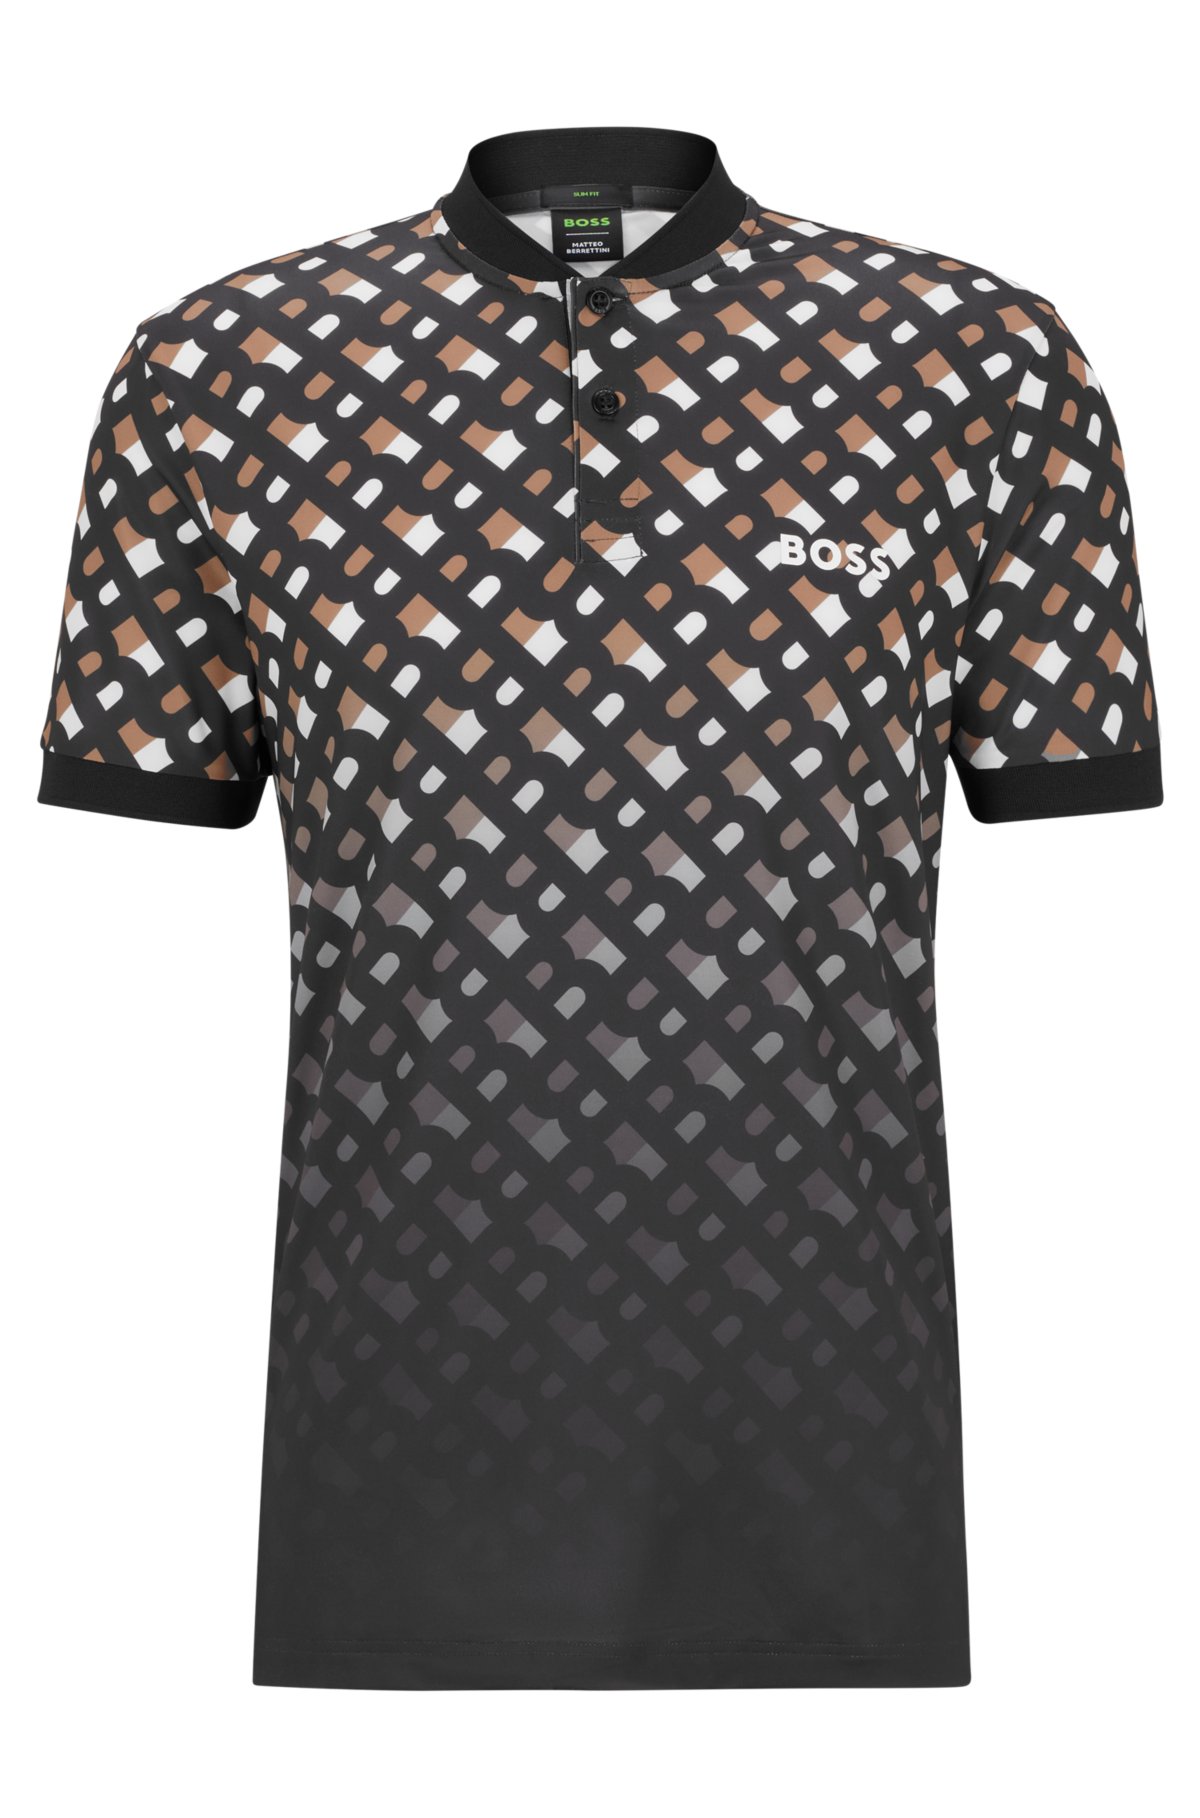 Louis Vuitton® Mixed Monogram Pajama Shirt Black. Size 36